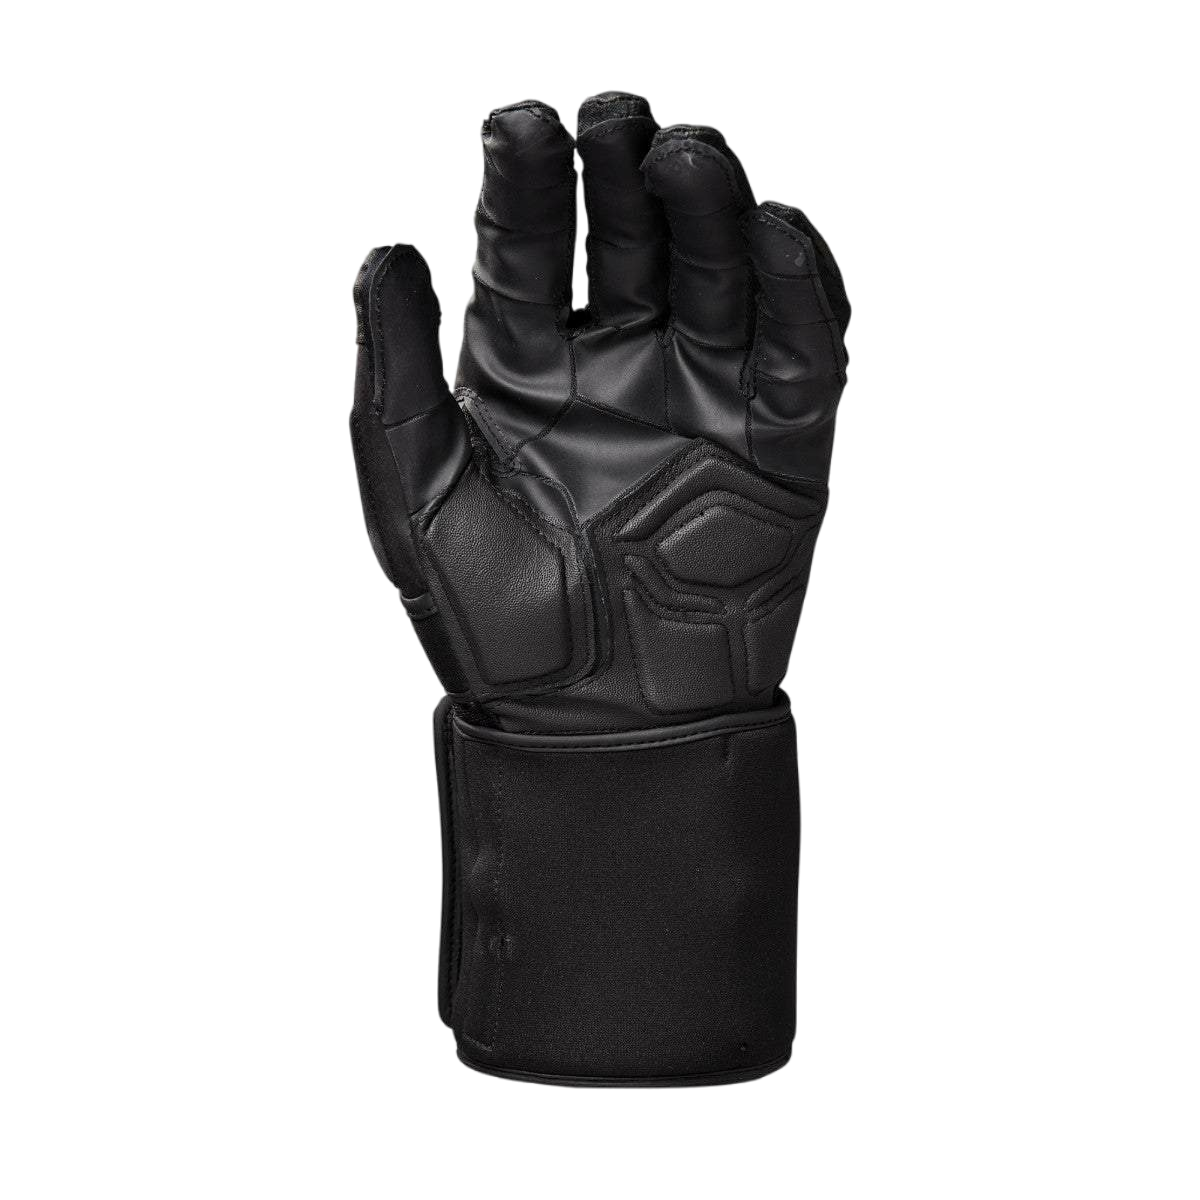 EvoShield Trench Lineman Gloves - Premium Football Gloves from Jefu - Shop now at Reyrr Athletics